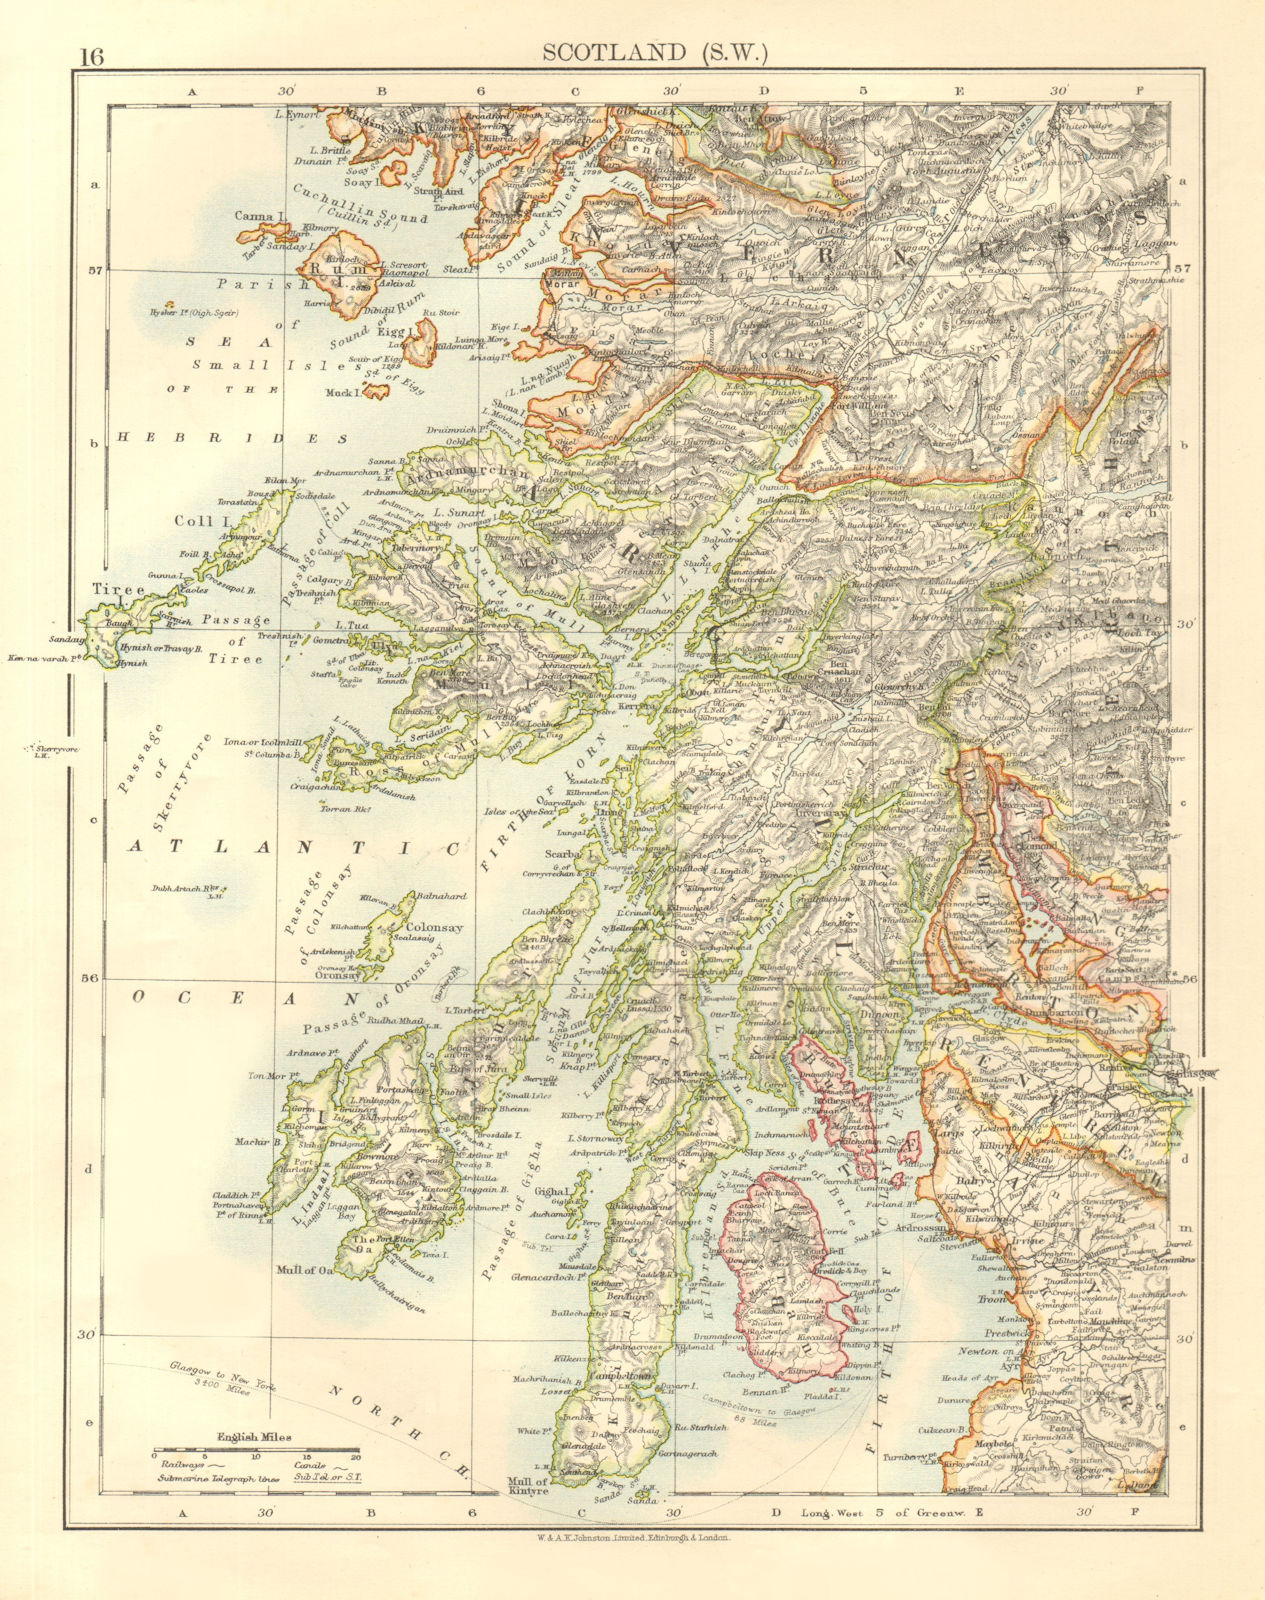 ARGYLLSHIRE. South West Scotland. Bute Arran Dumbarton.  JOHNSTON 1906 old map